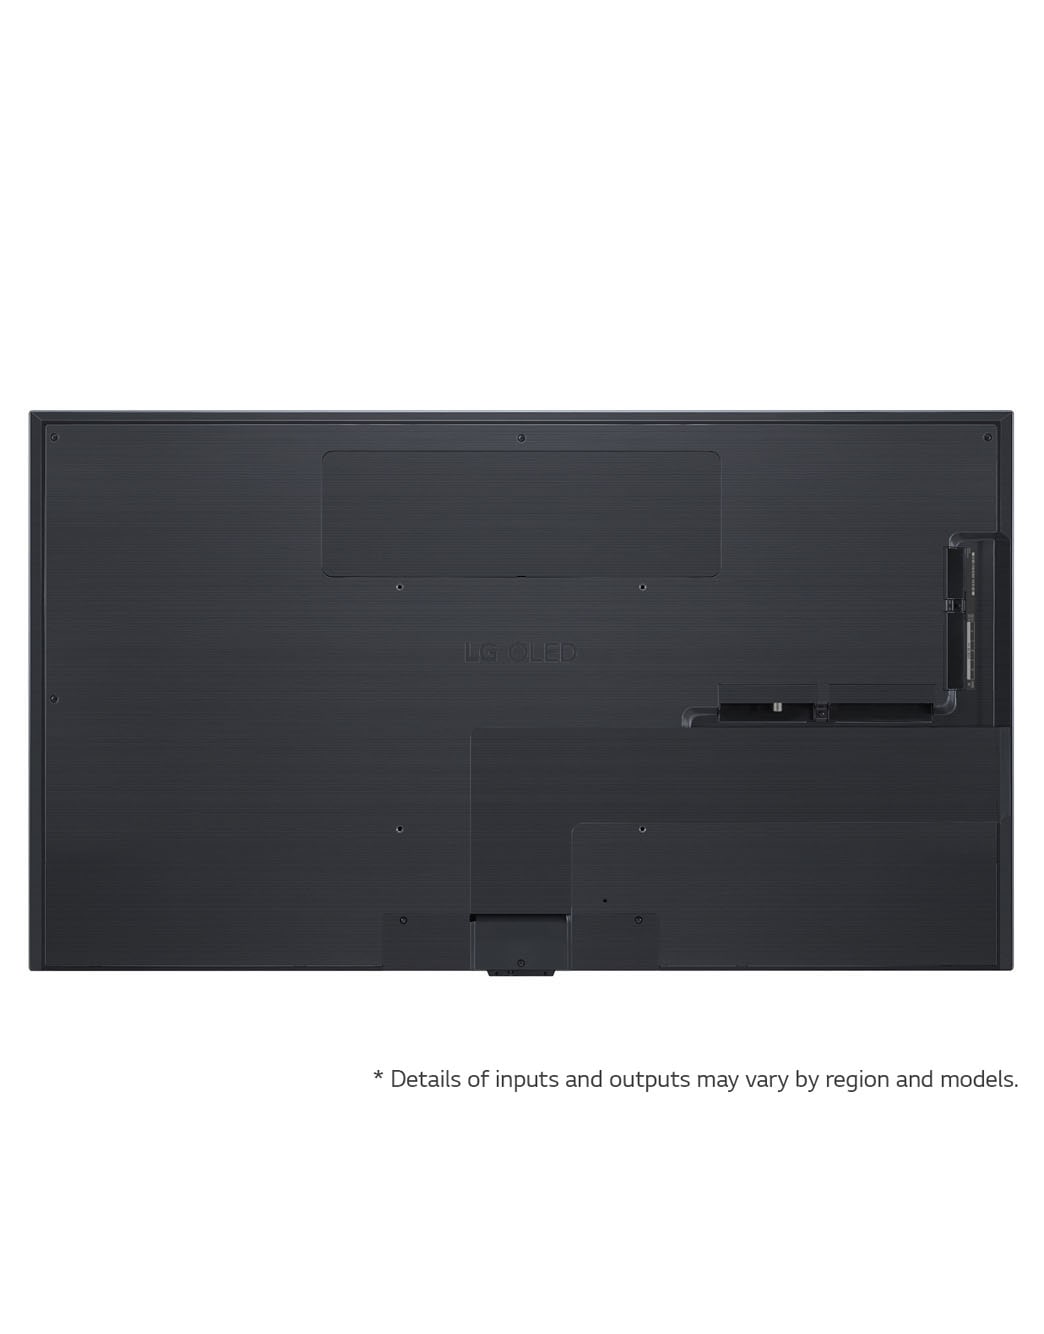 LG 65WS960H 65" SMART Hospitality 4K OLED TV Back View